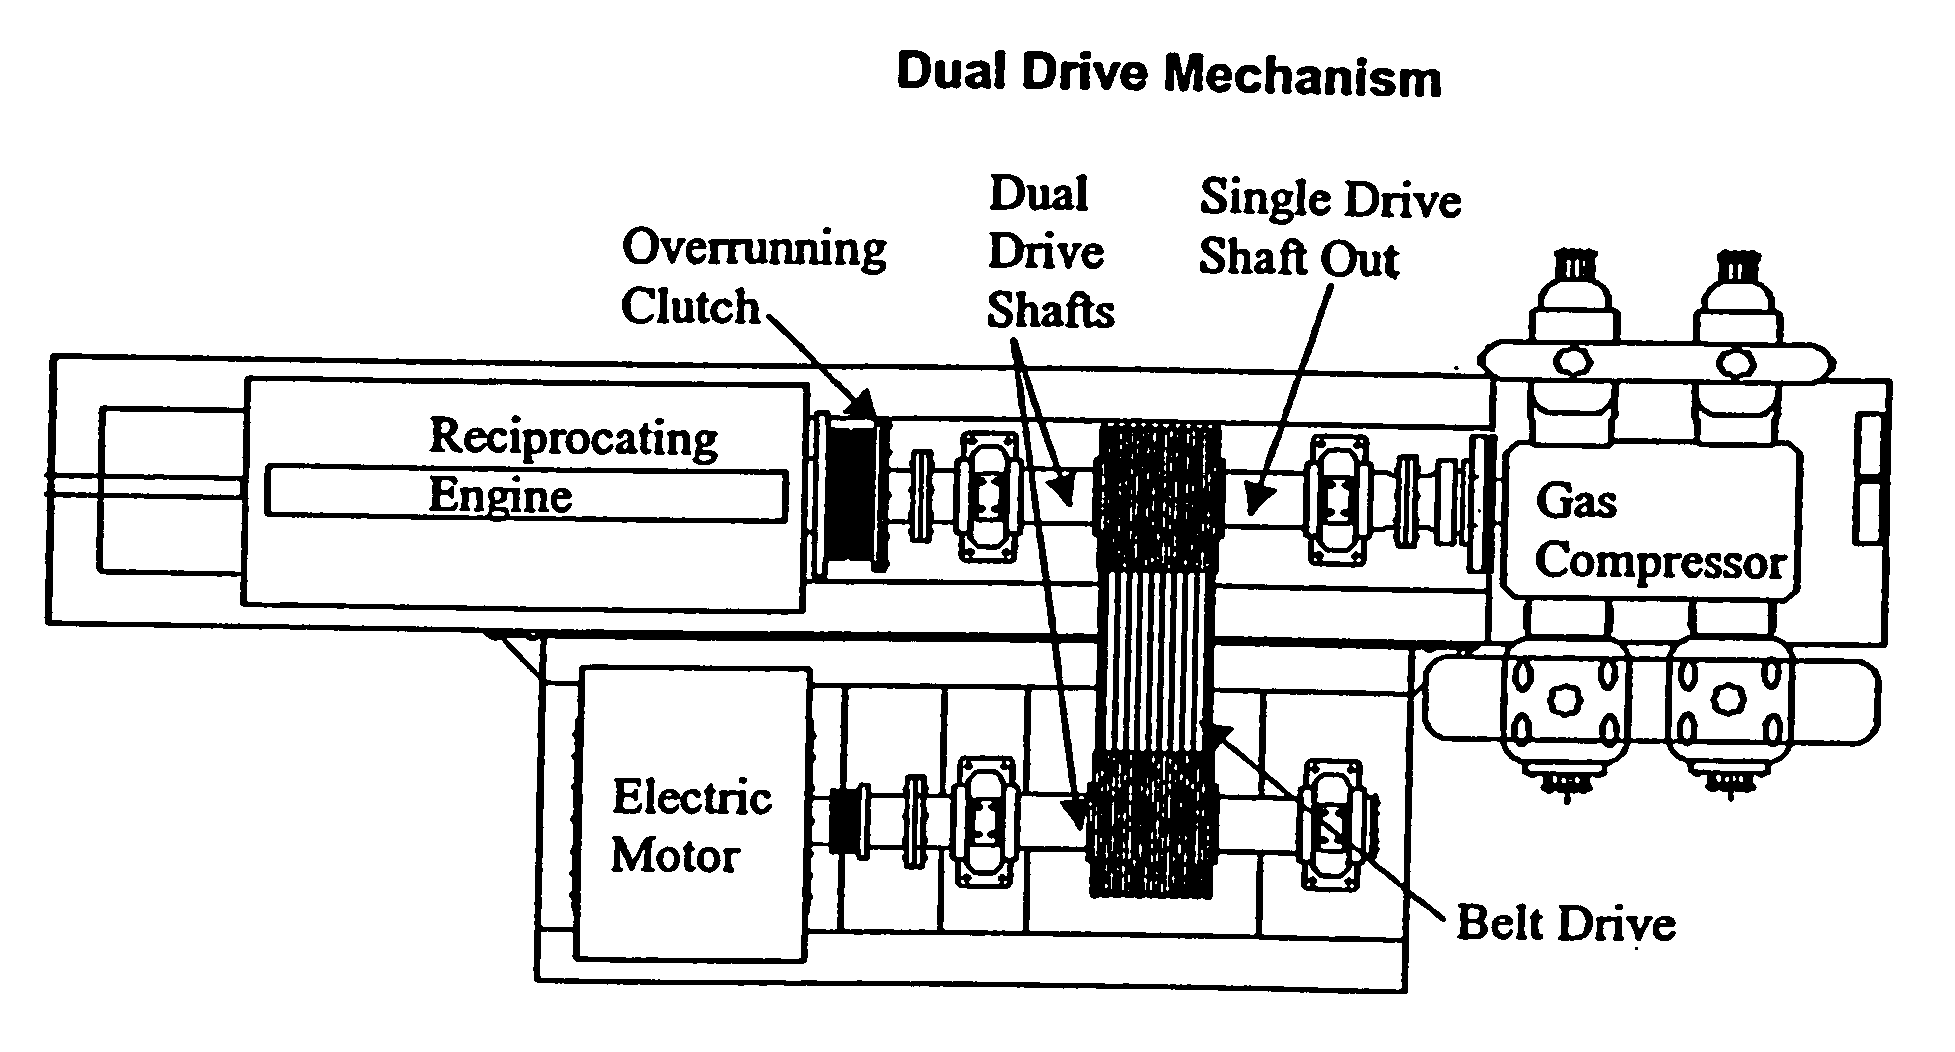 Gas compressor dual drive mechanism